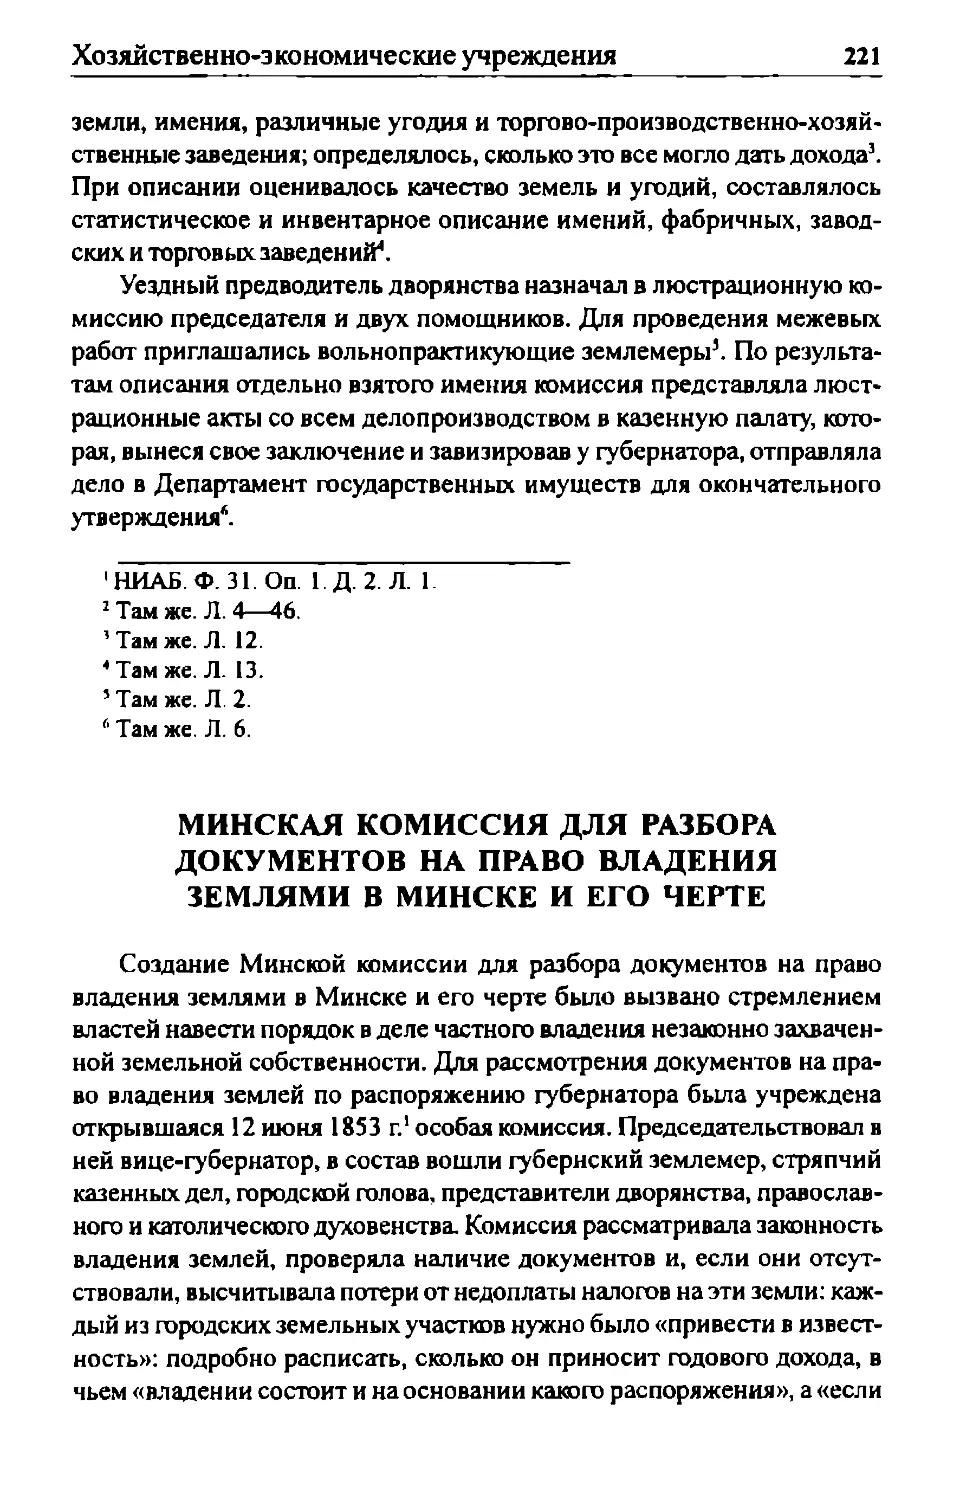 Минская комиссия для разбора документов на право владения землями в Минске и его черте